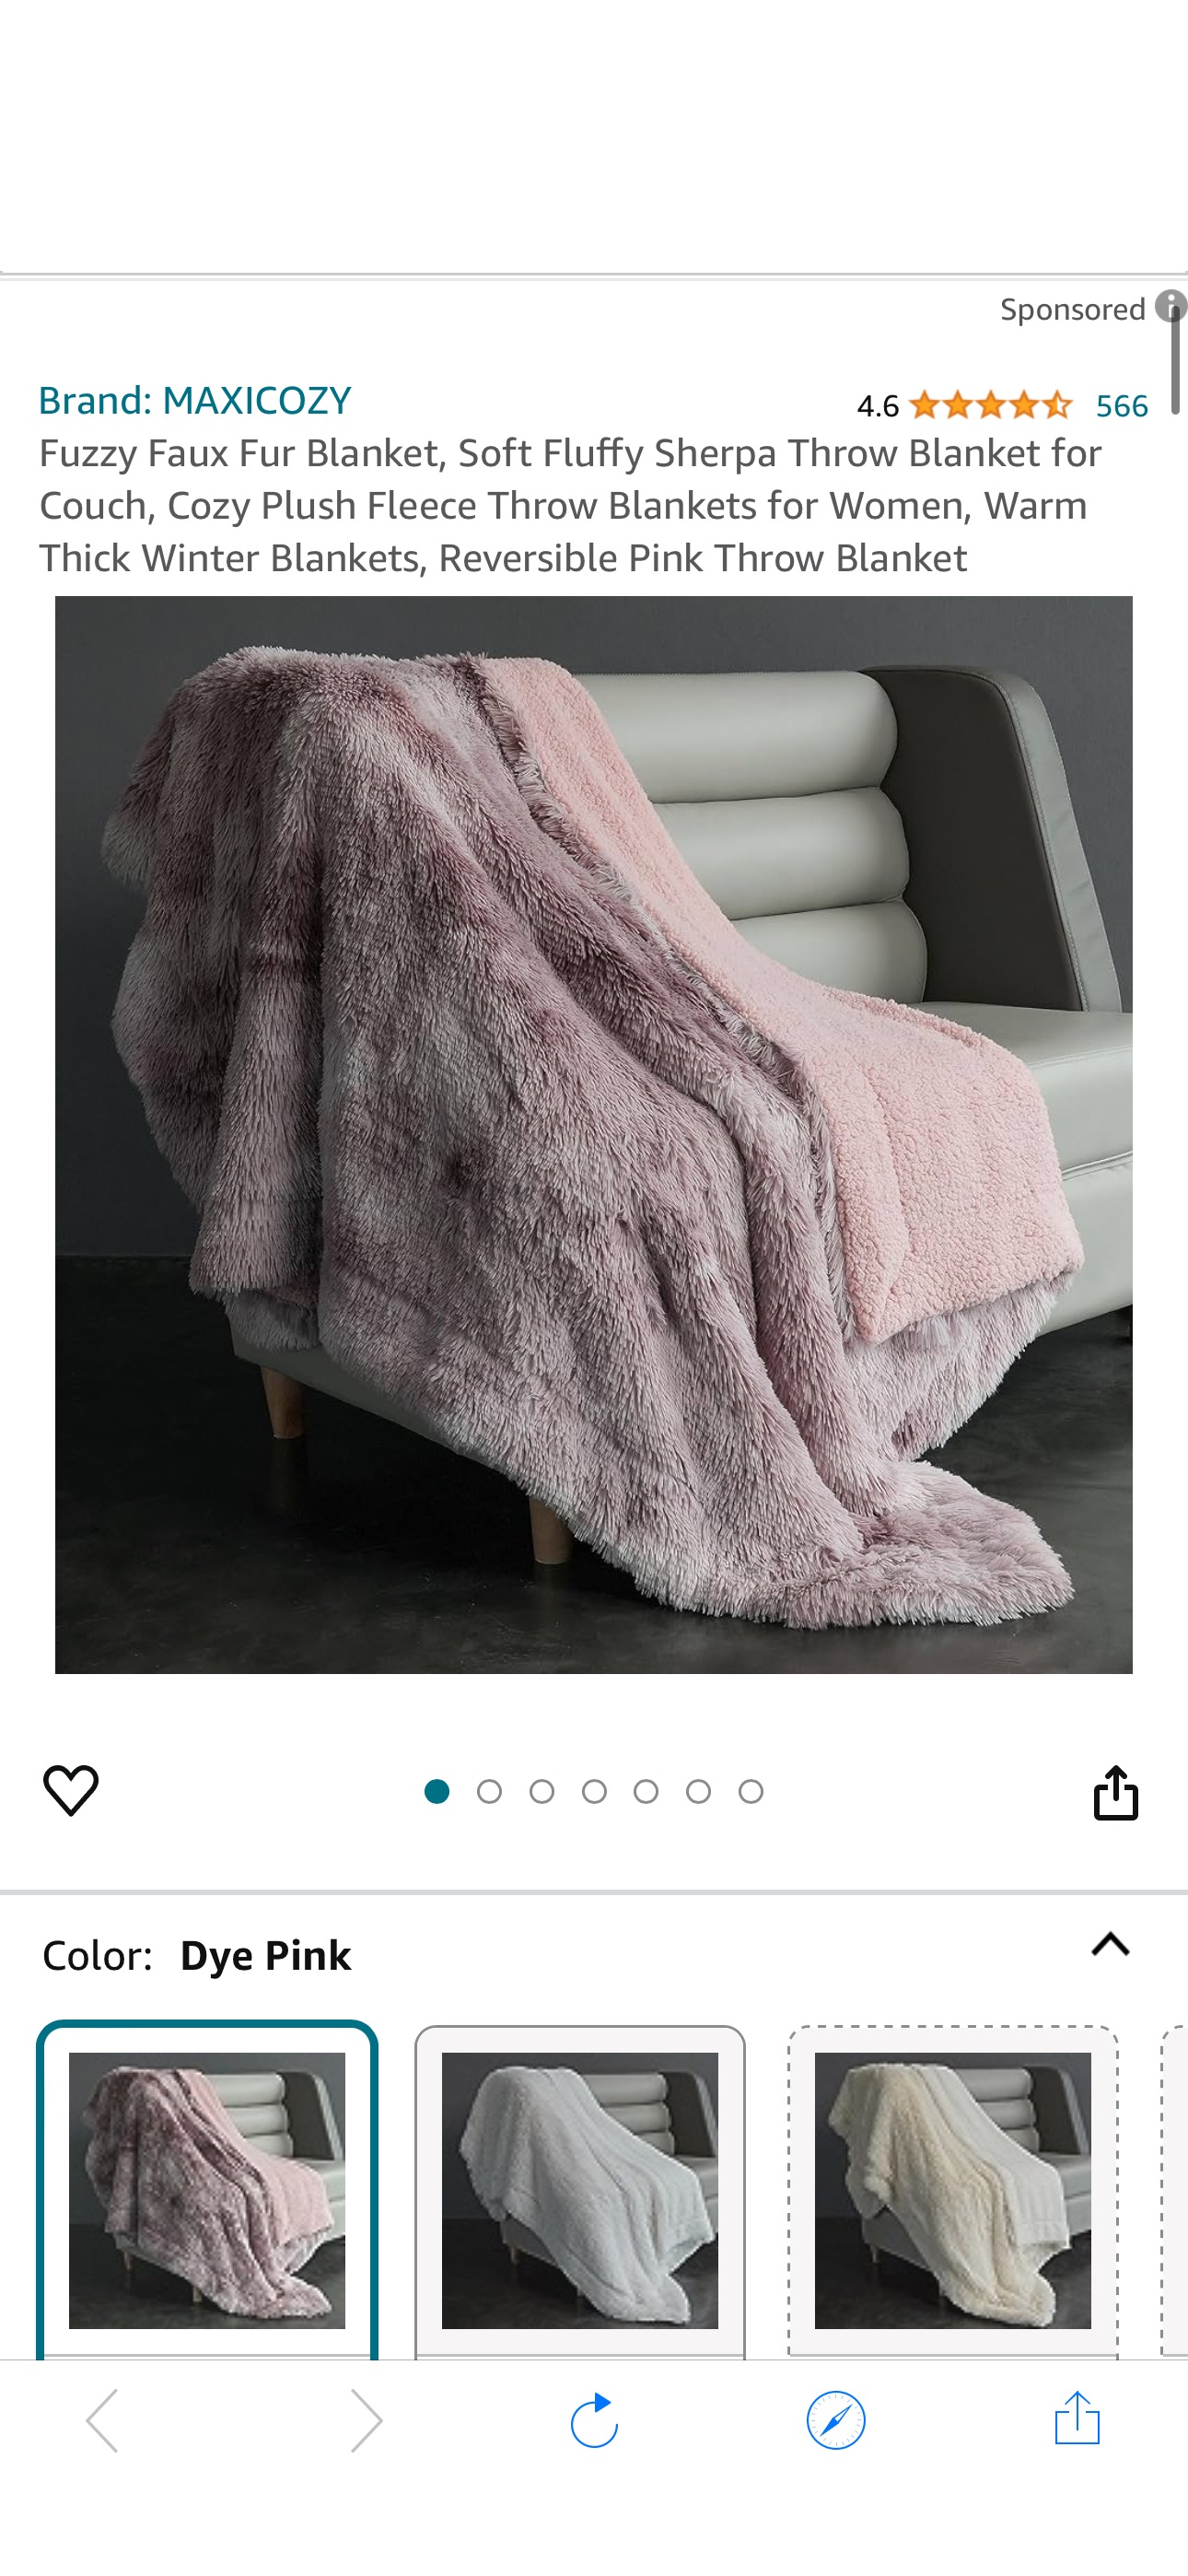 Amazon.com: MAXICOZY Fuzzy Faux Fur Blanket, Soft Fluffy Sherpa Throw Blanket for Couch, Cozy Plush Fleece Throw Blankets 
Use Code 509D534Z